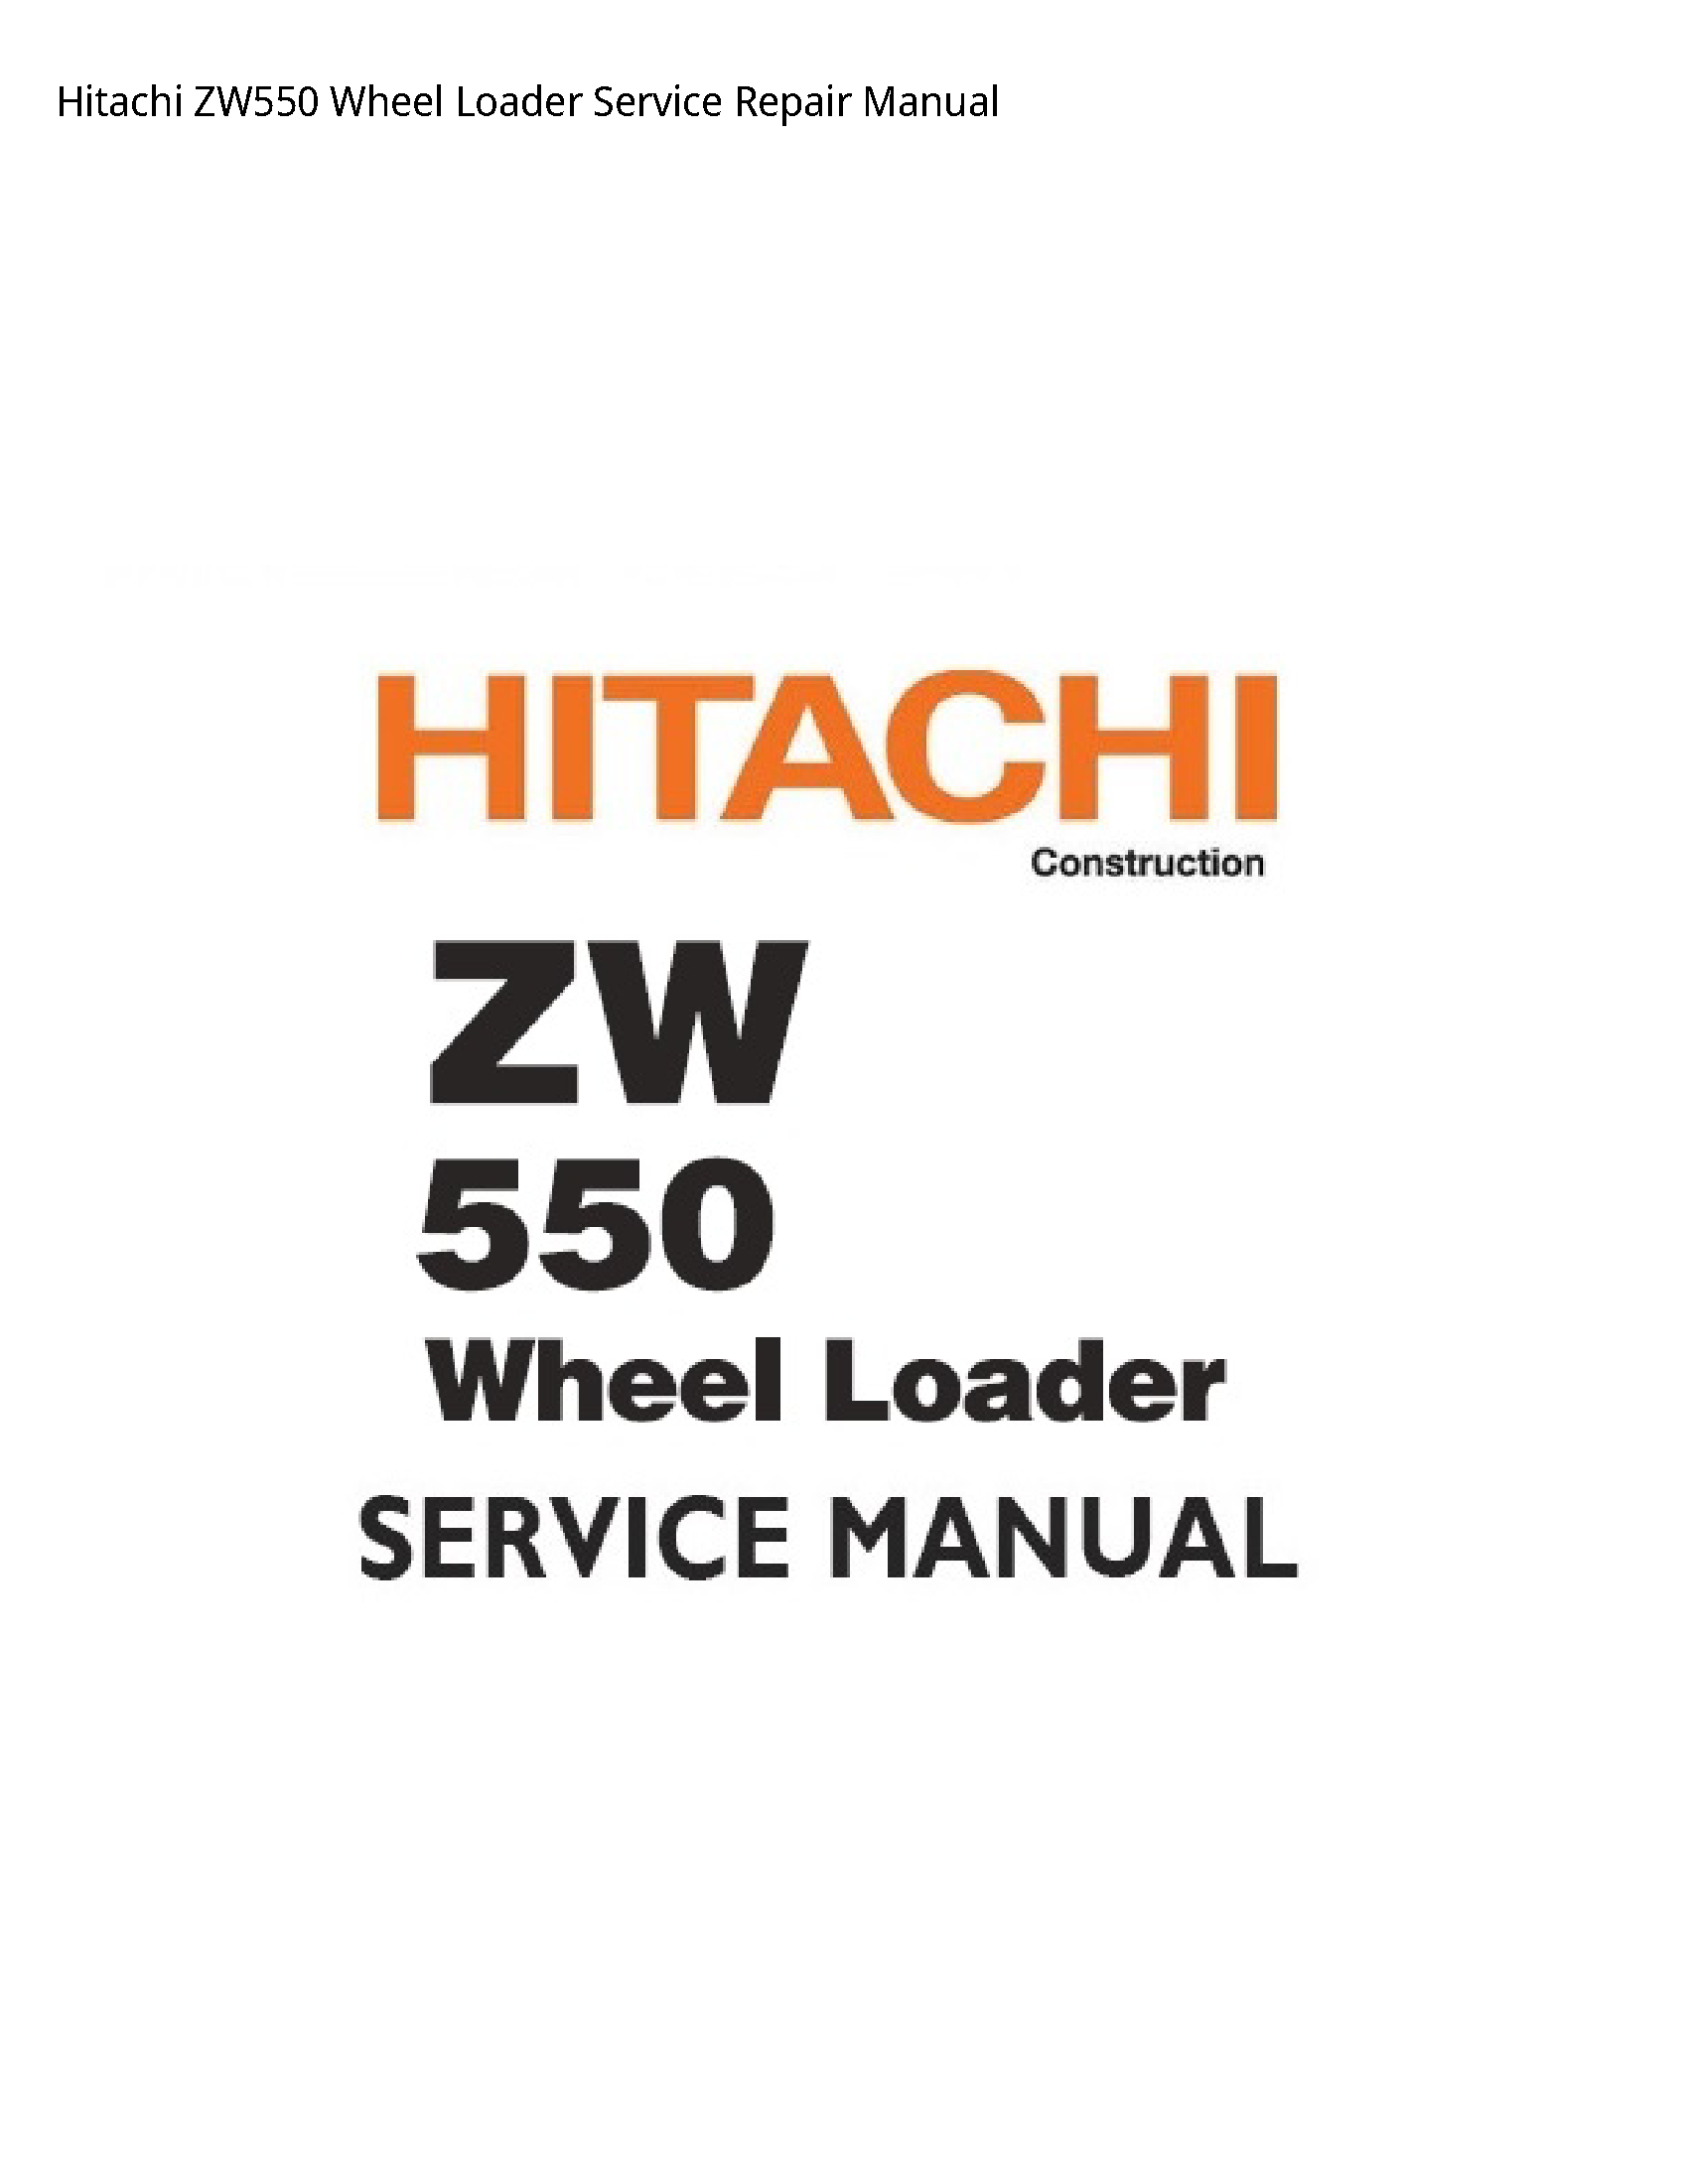 Hitachi ZW550 Wheel Loader manual